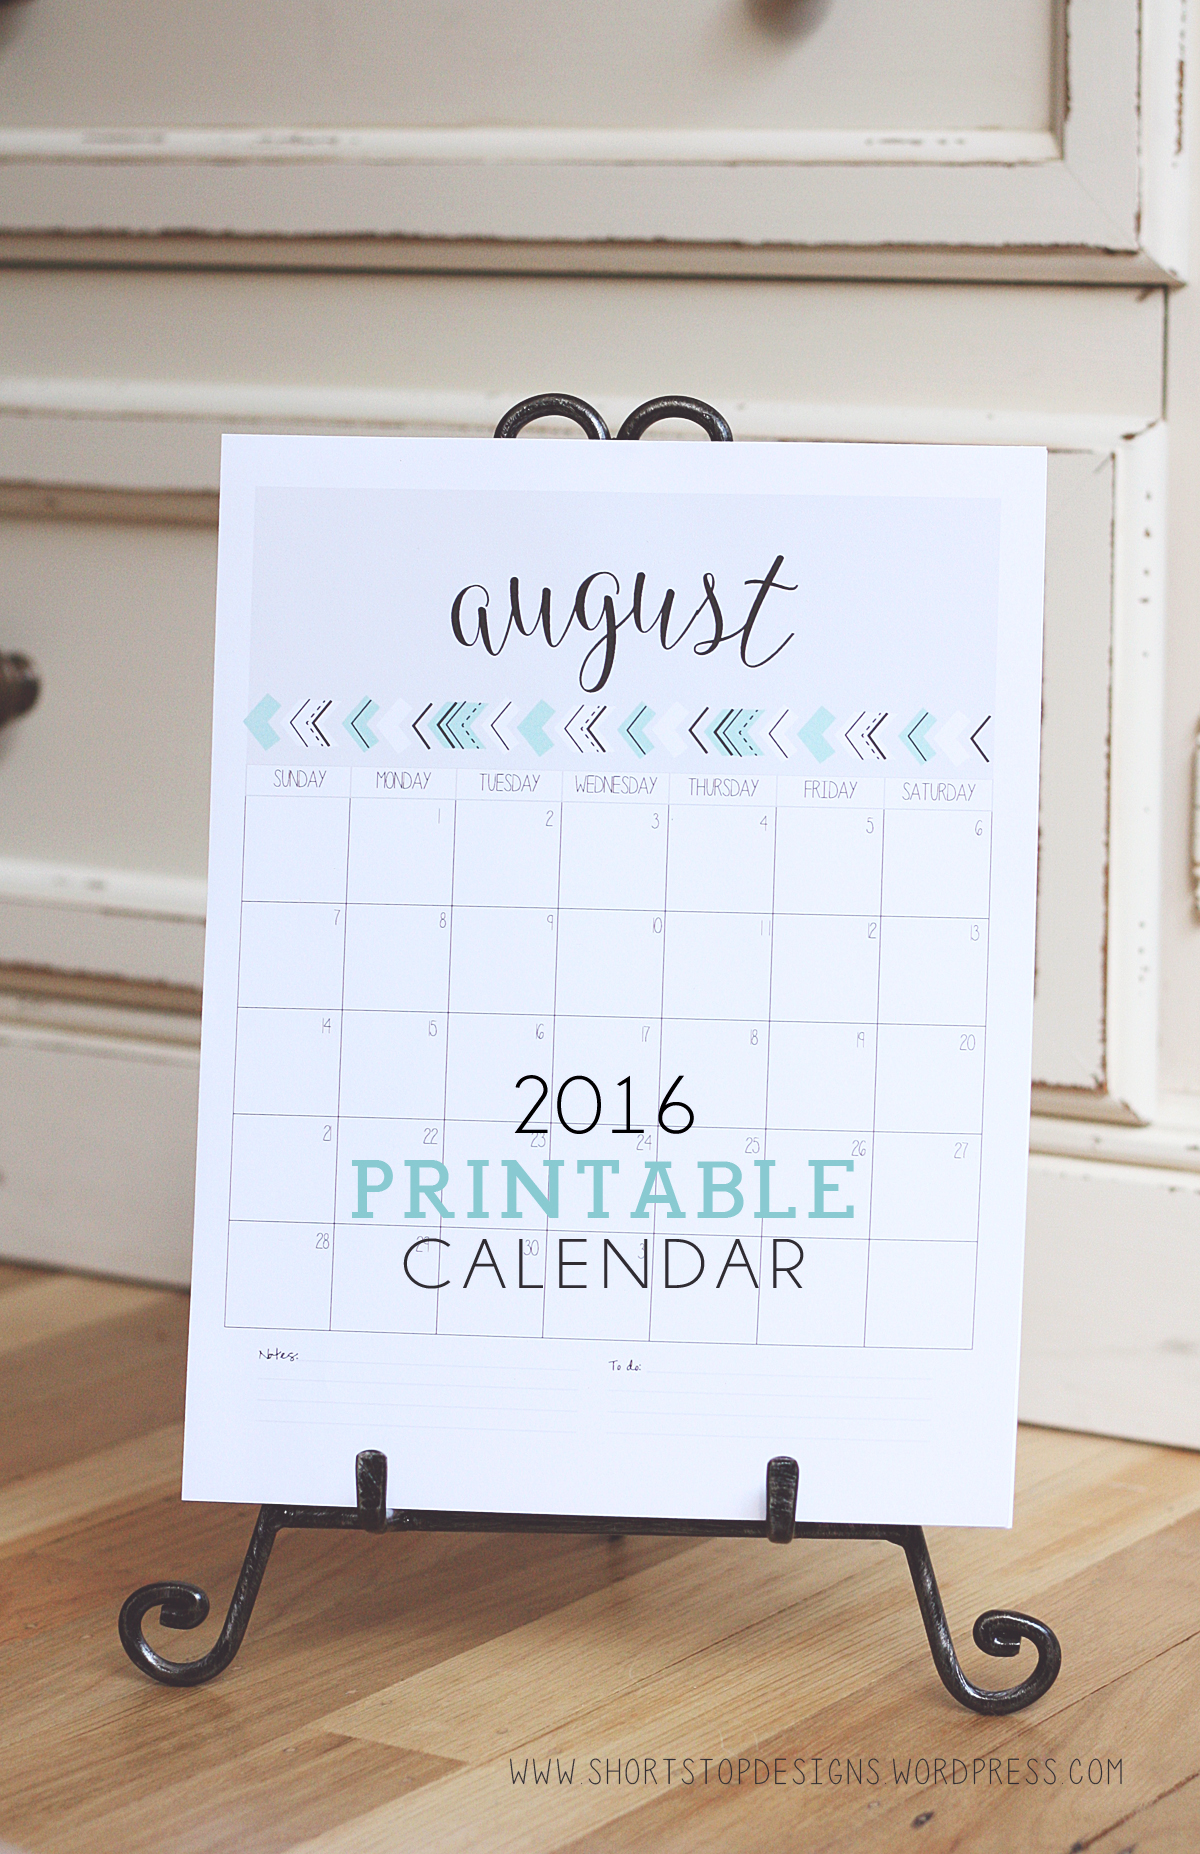 Glimlach Nadeel ik klaag 2016 Calendar Printable – Short Stop Designs